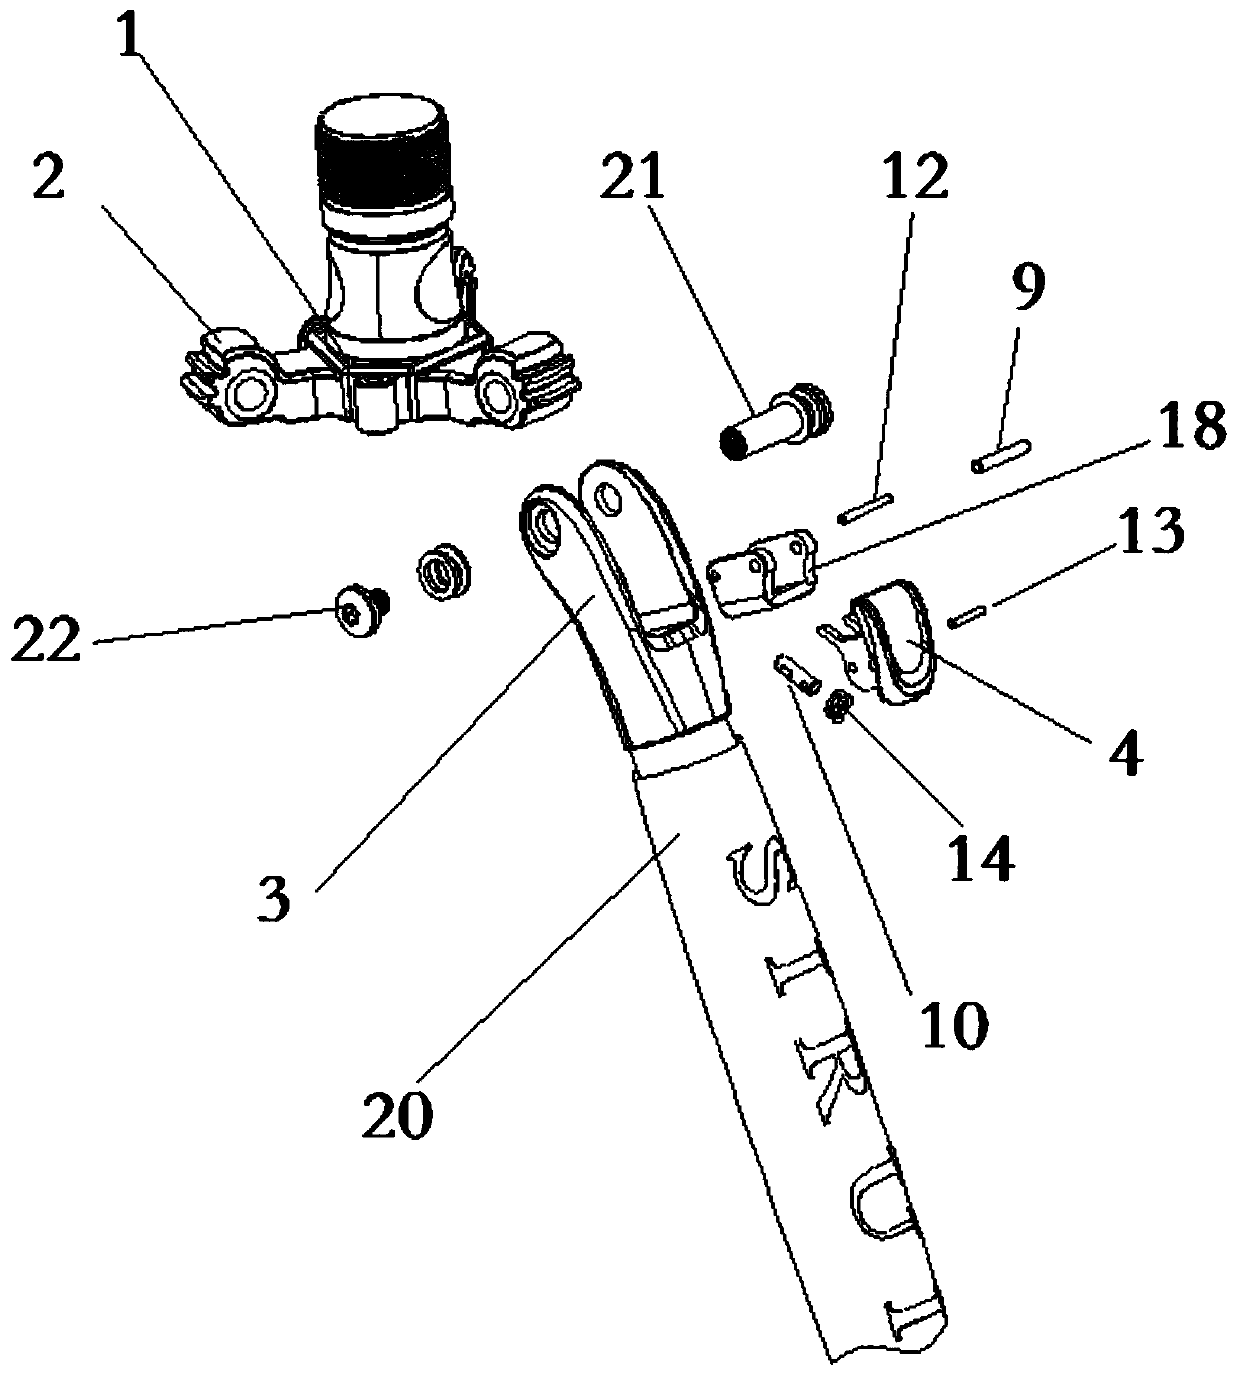 Tripod button mechanism and tripod